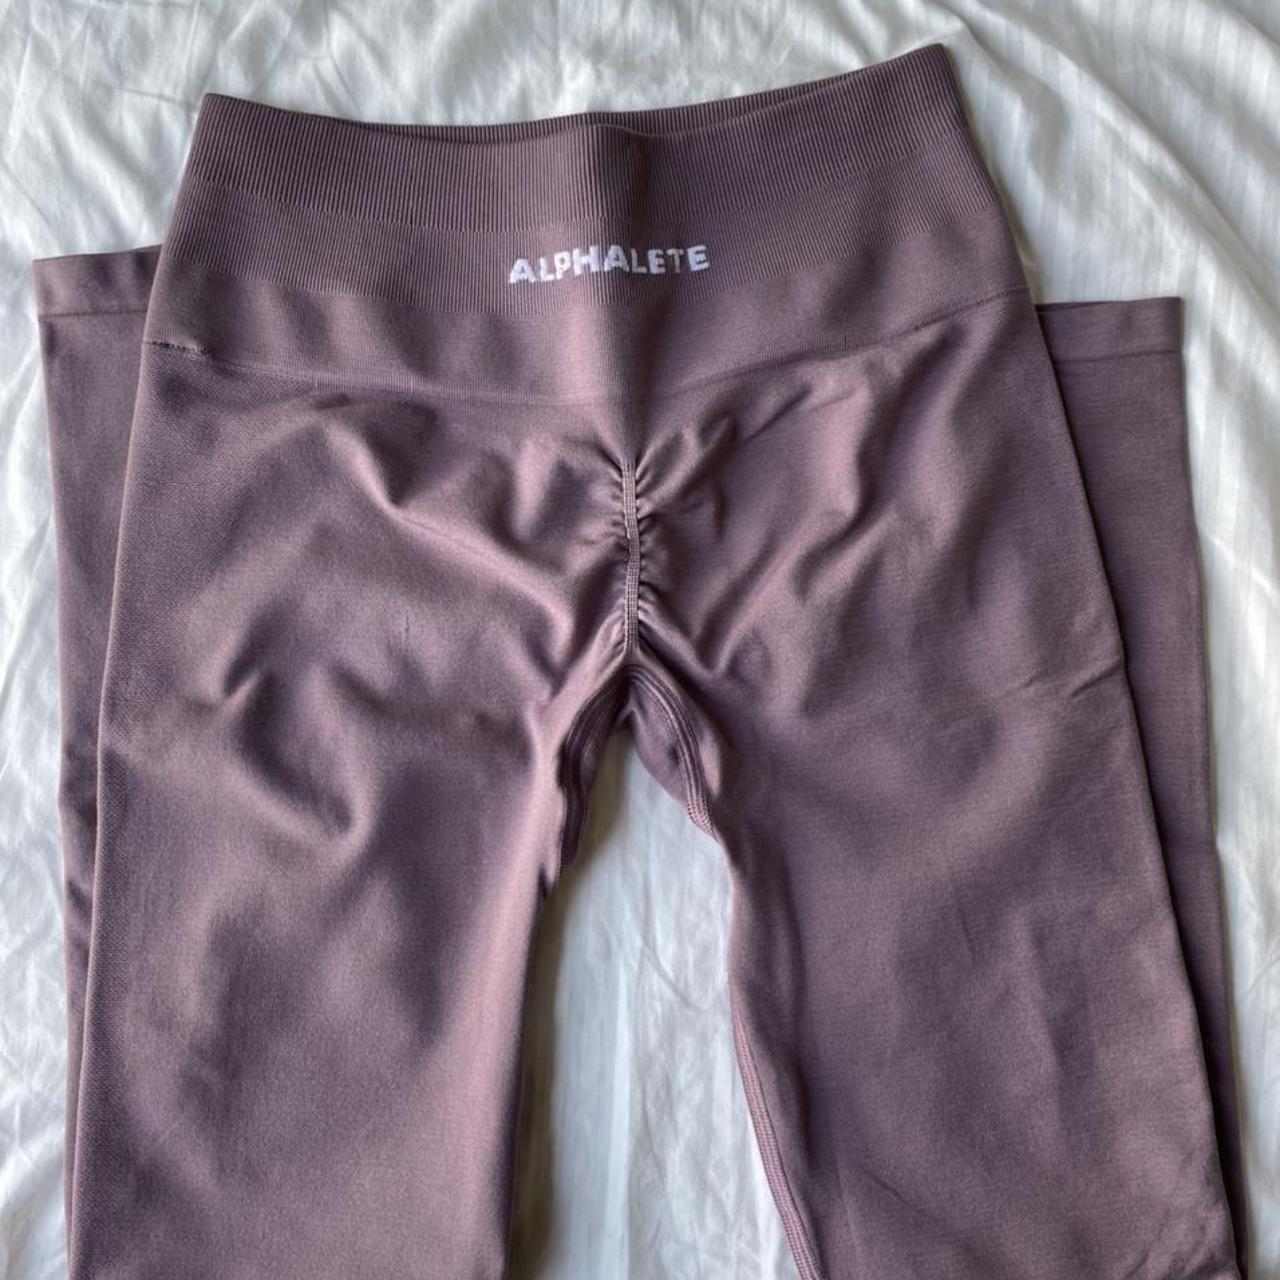 Alphalete amplify leggings Sold out online Size xs - Depop